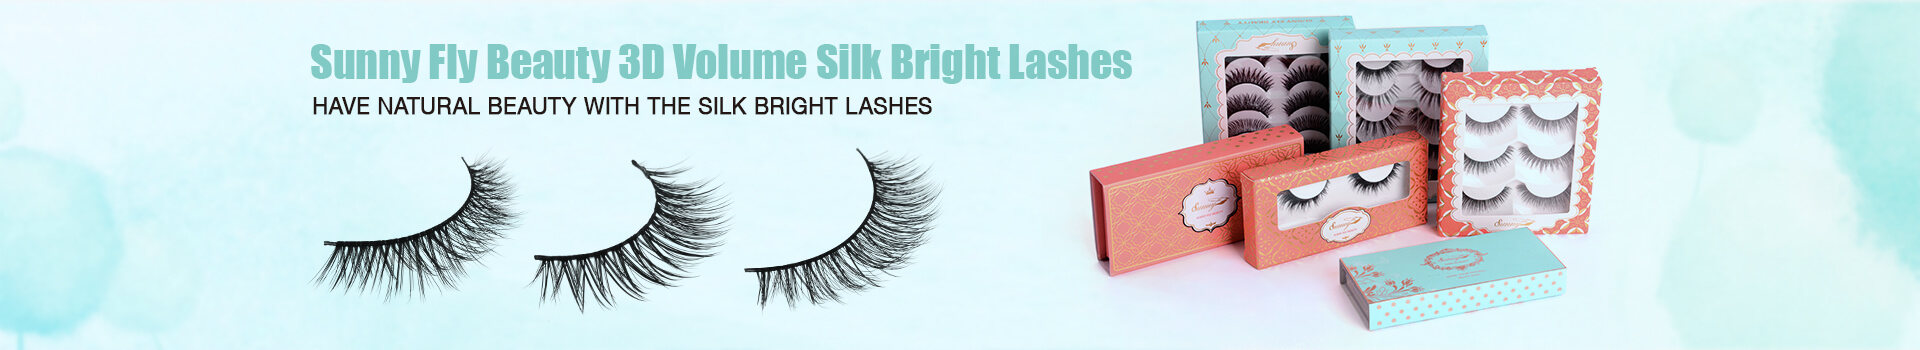 3D Volume Silk Bright Eyelashes FA14